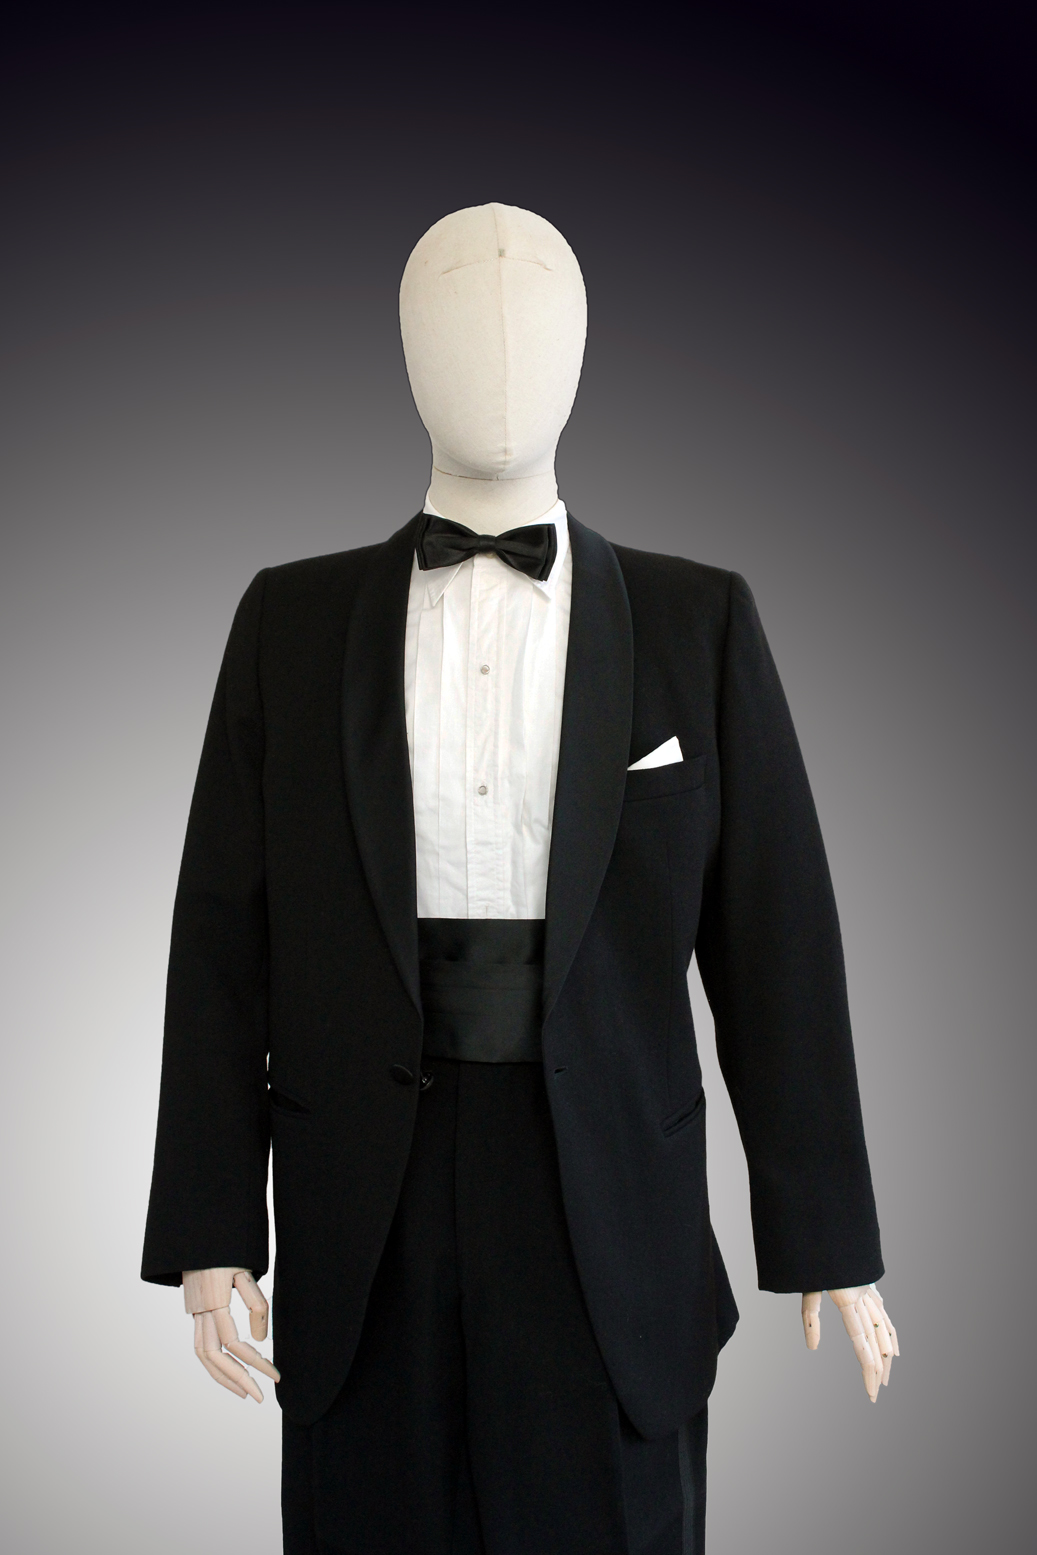 1960s Diner suit, American Tuxedo - La compagnie du costume